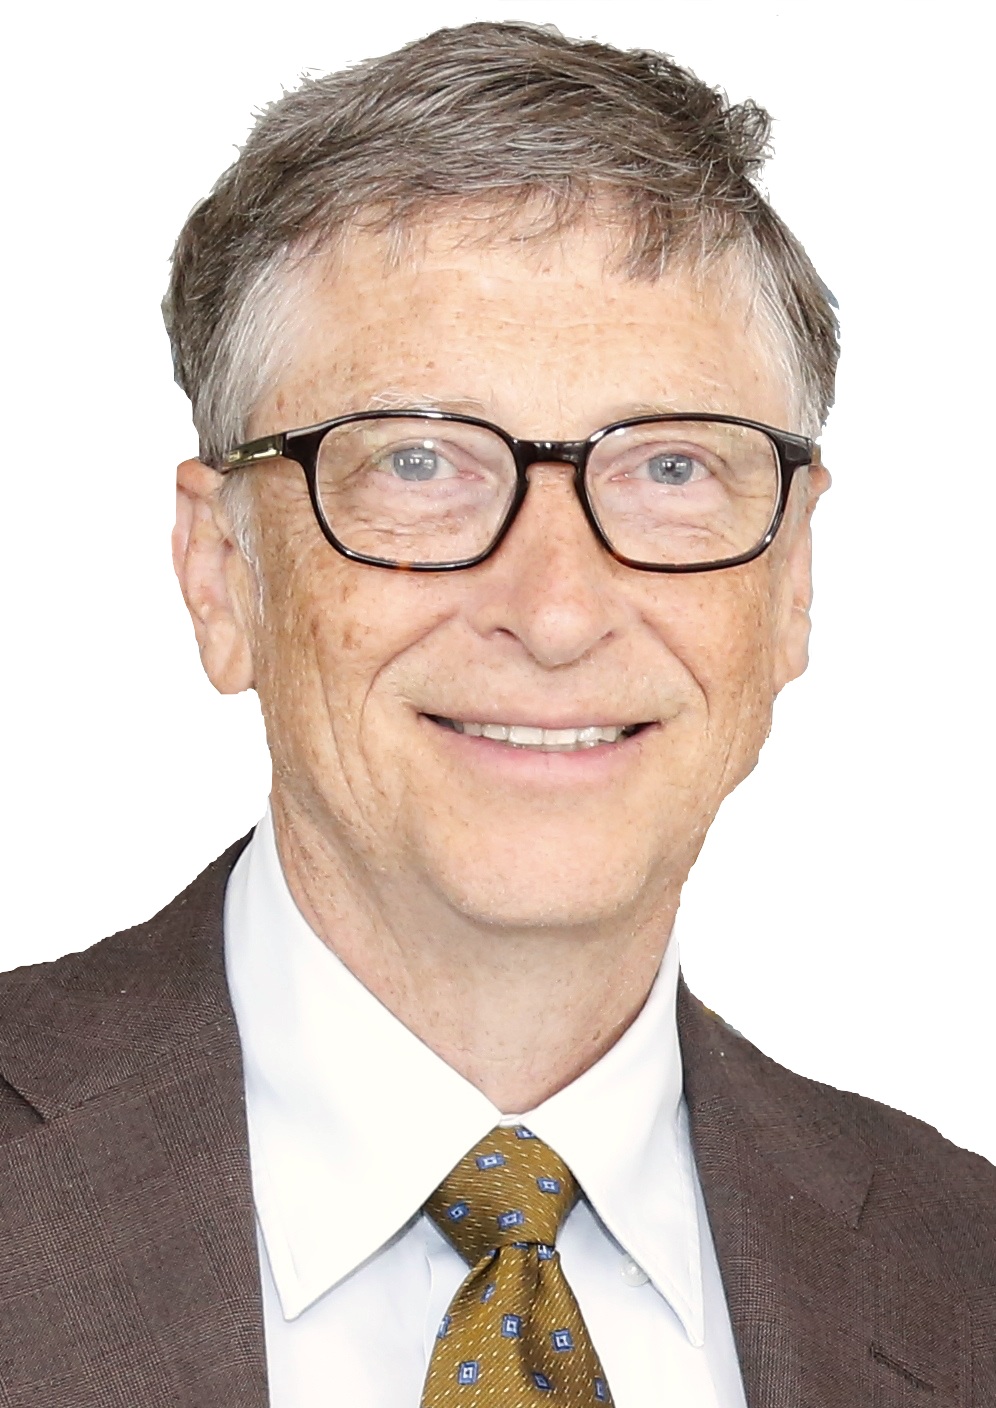 Gates Bill Face Free Transparent Image HQ PNG Image